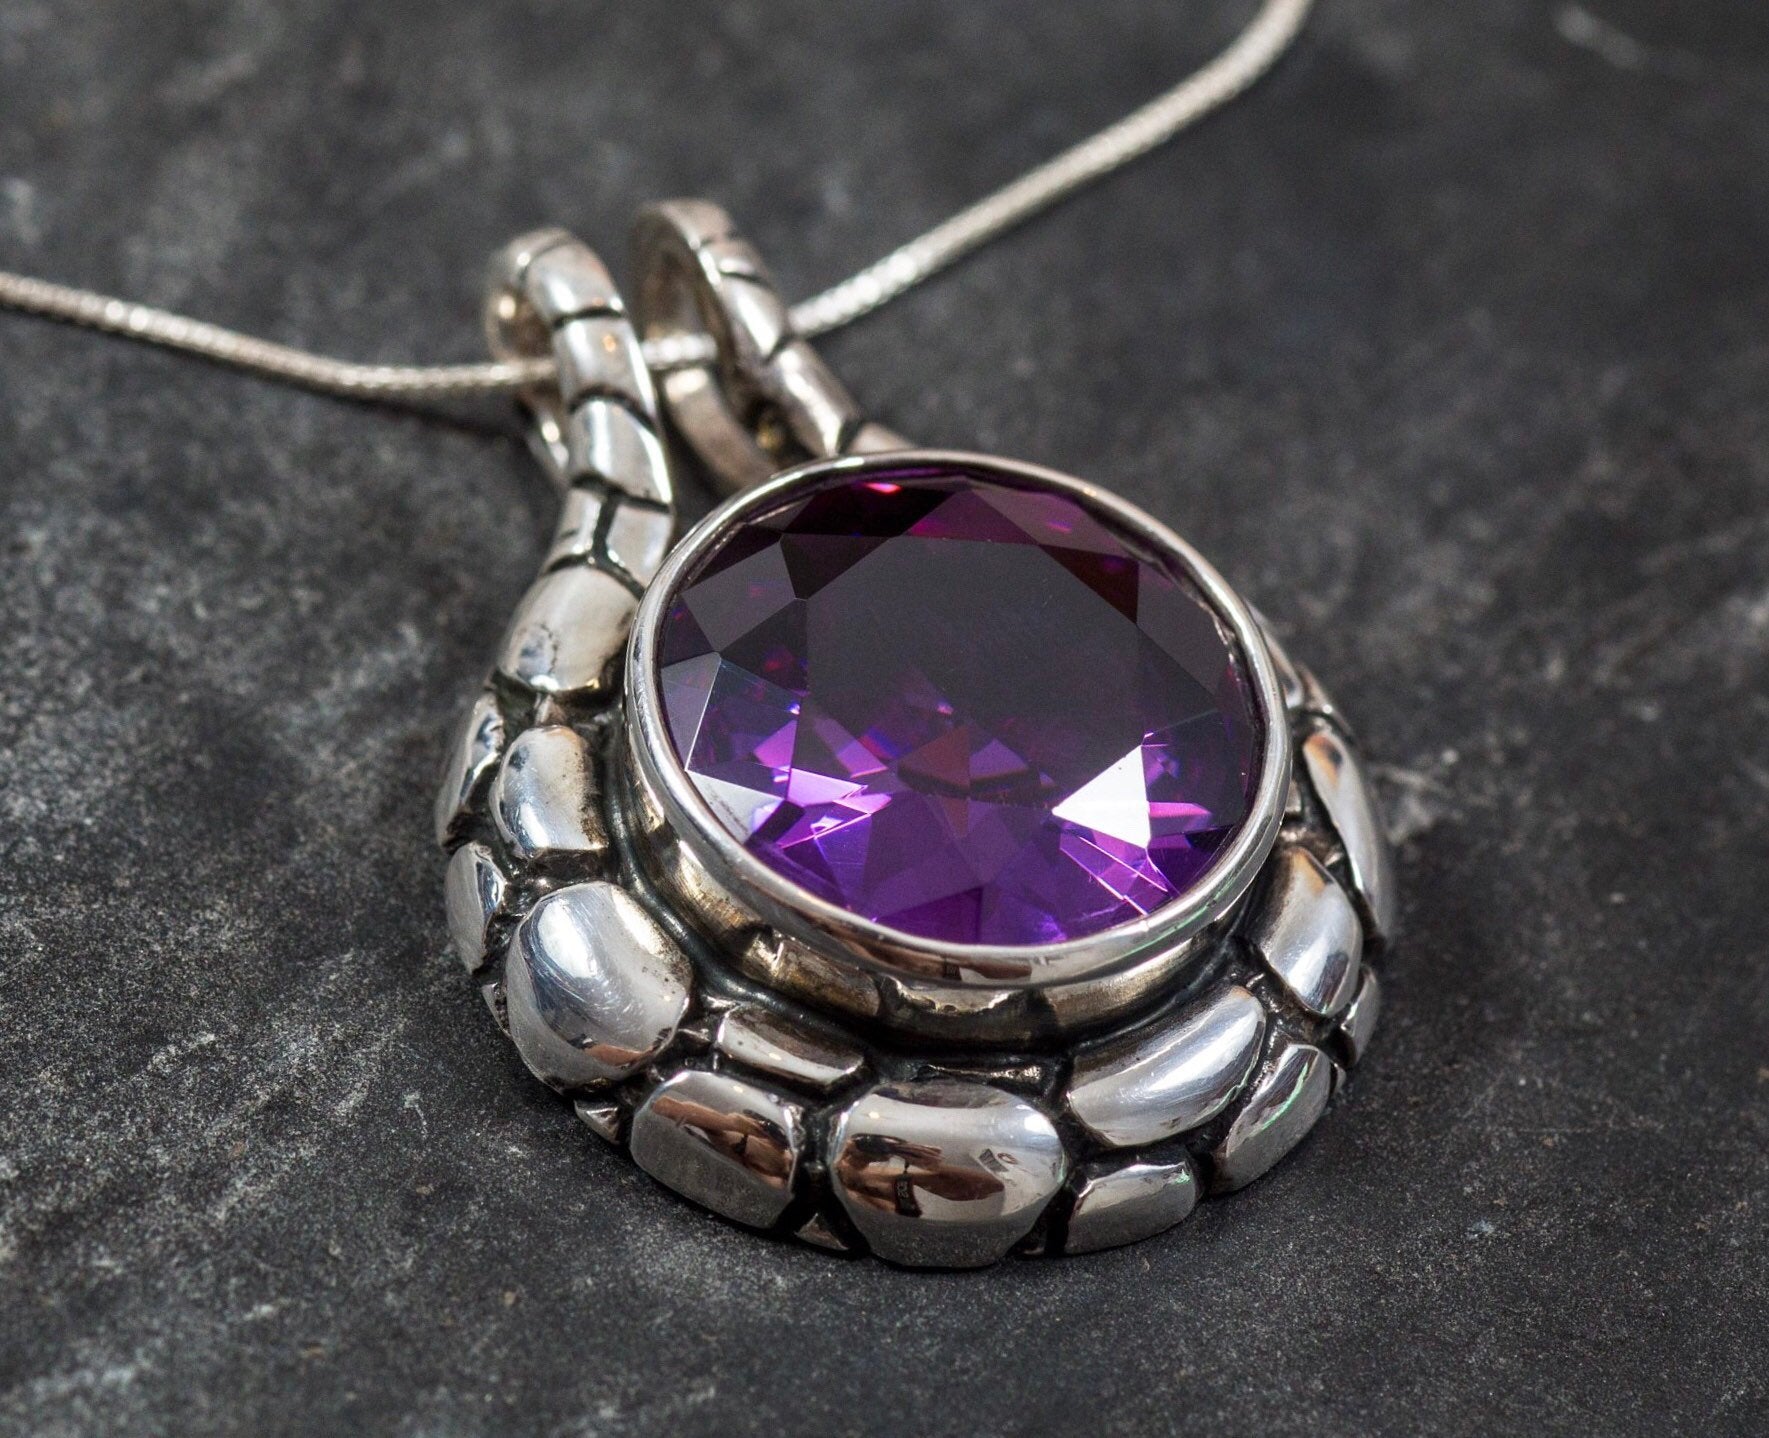 Violet Sapphire Pendant, Created Sapphire, Violet Pendant, Large Pendant, Statement Pendant, Purple Pendant, Heavy Silver Pendant, Violet